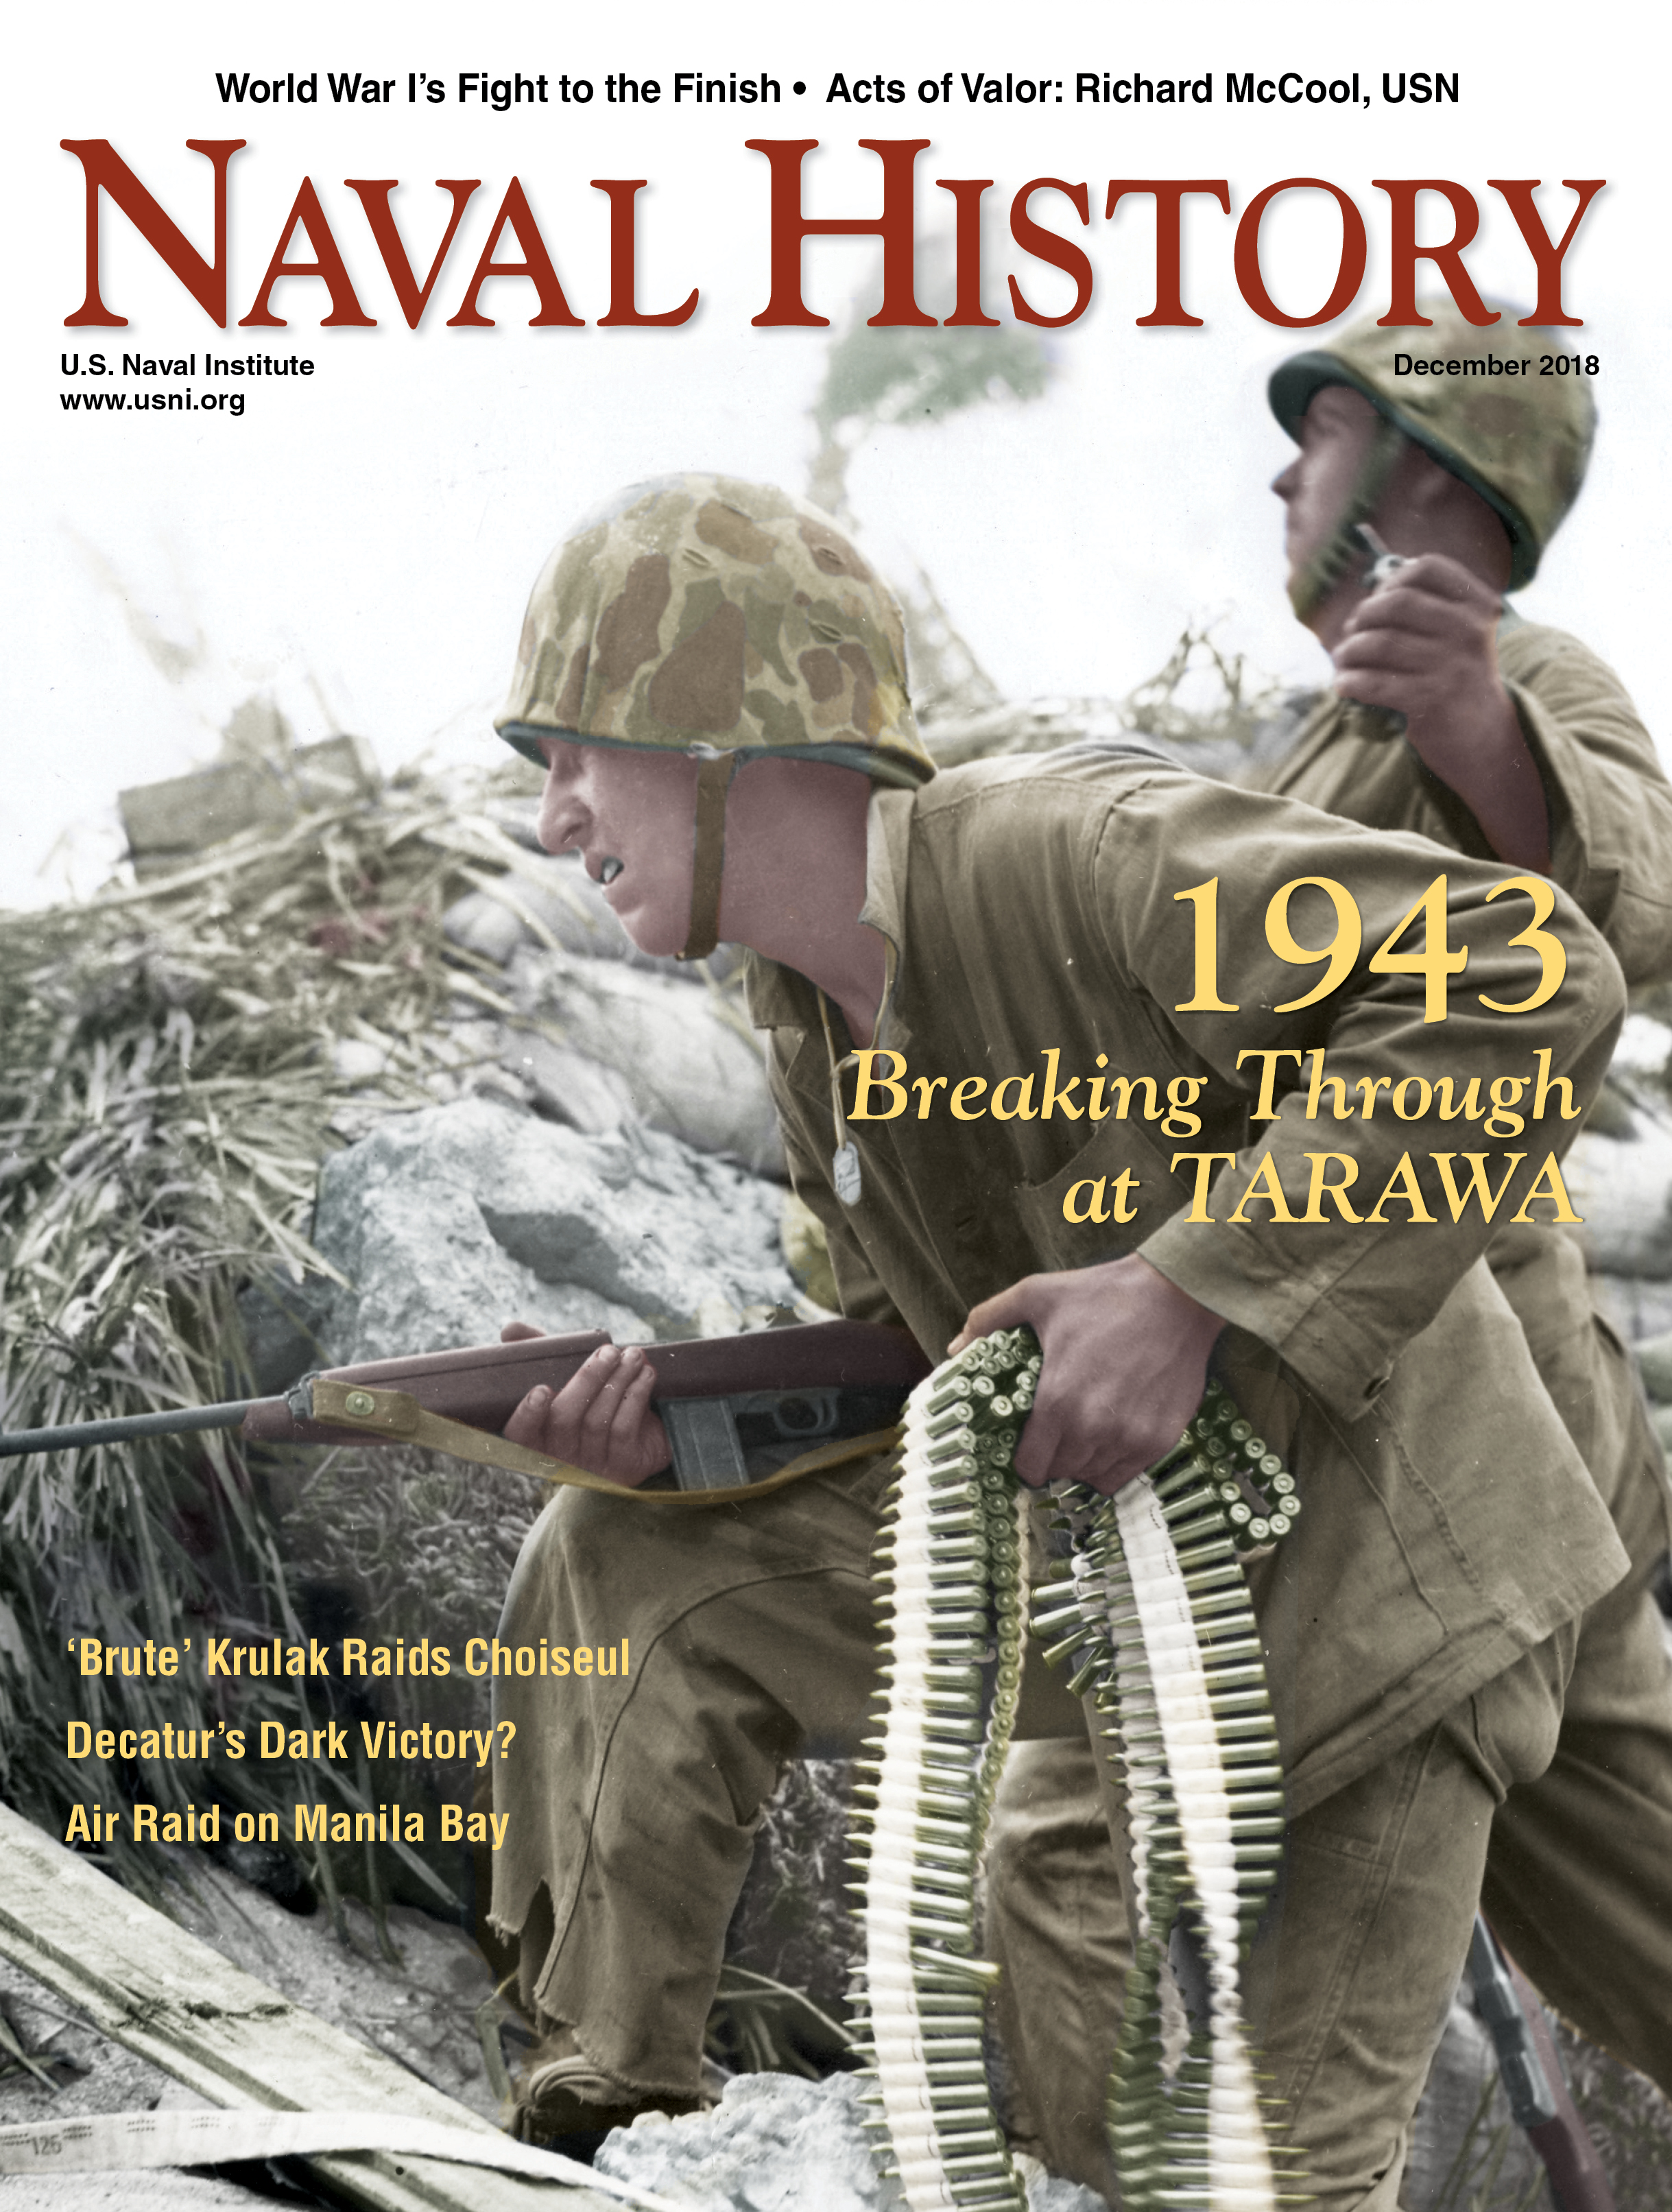 Naval History Magazine Cover, December 2018 Volume 32, Number 6